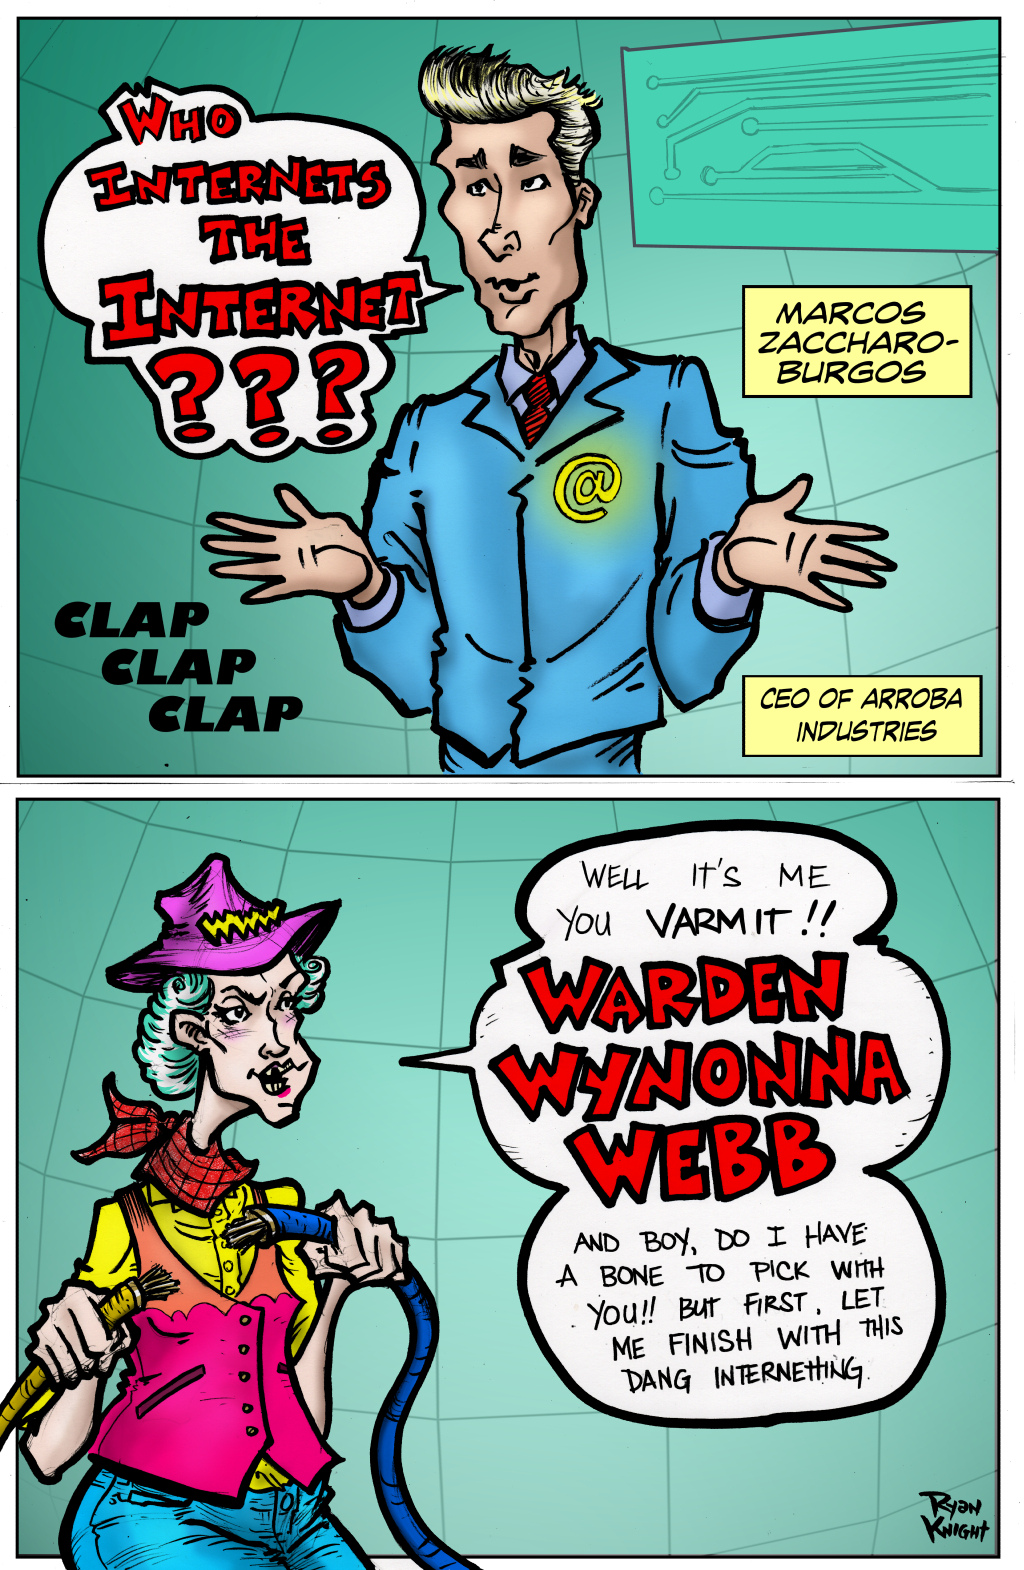 Warden Wynonna Webb: The Fastest Internetting Internetter in the Internet